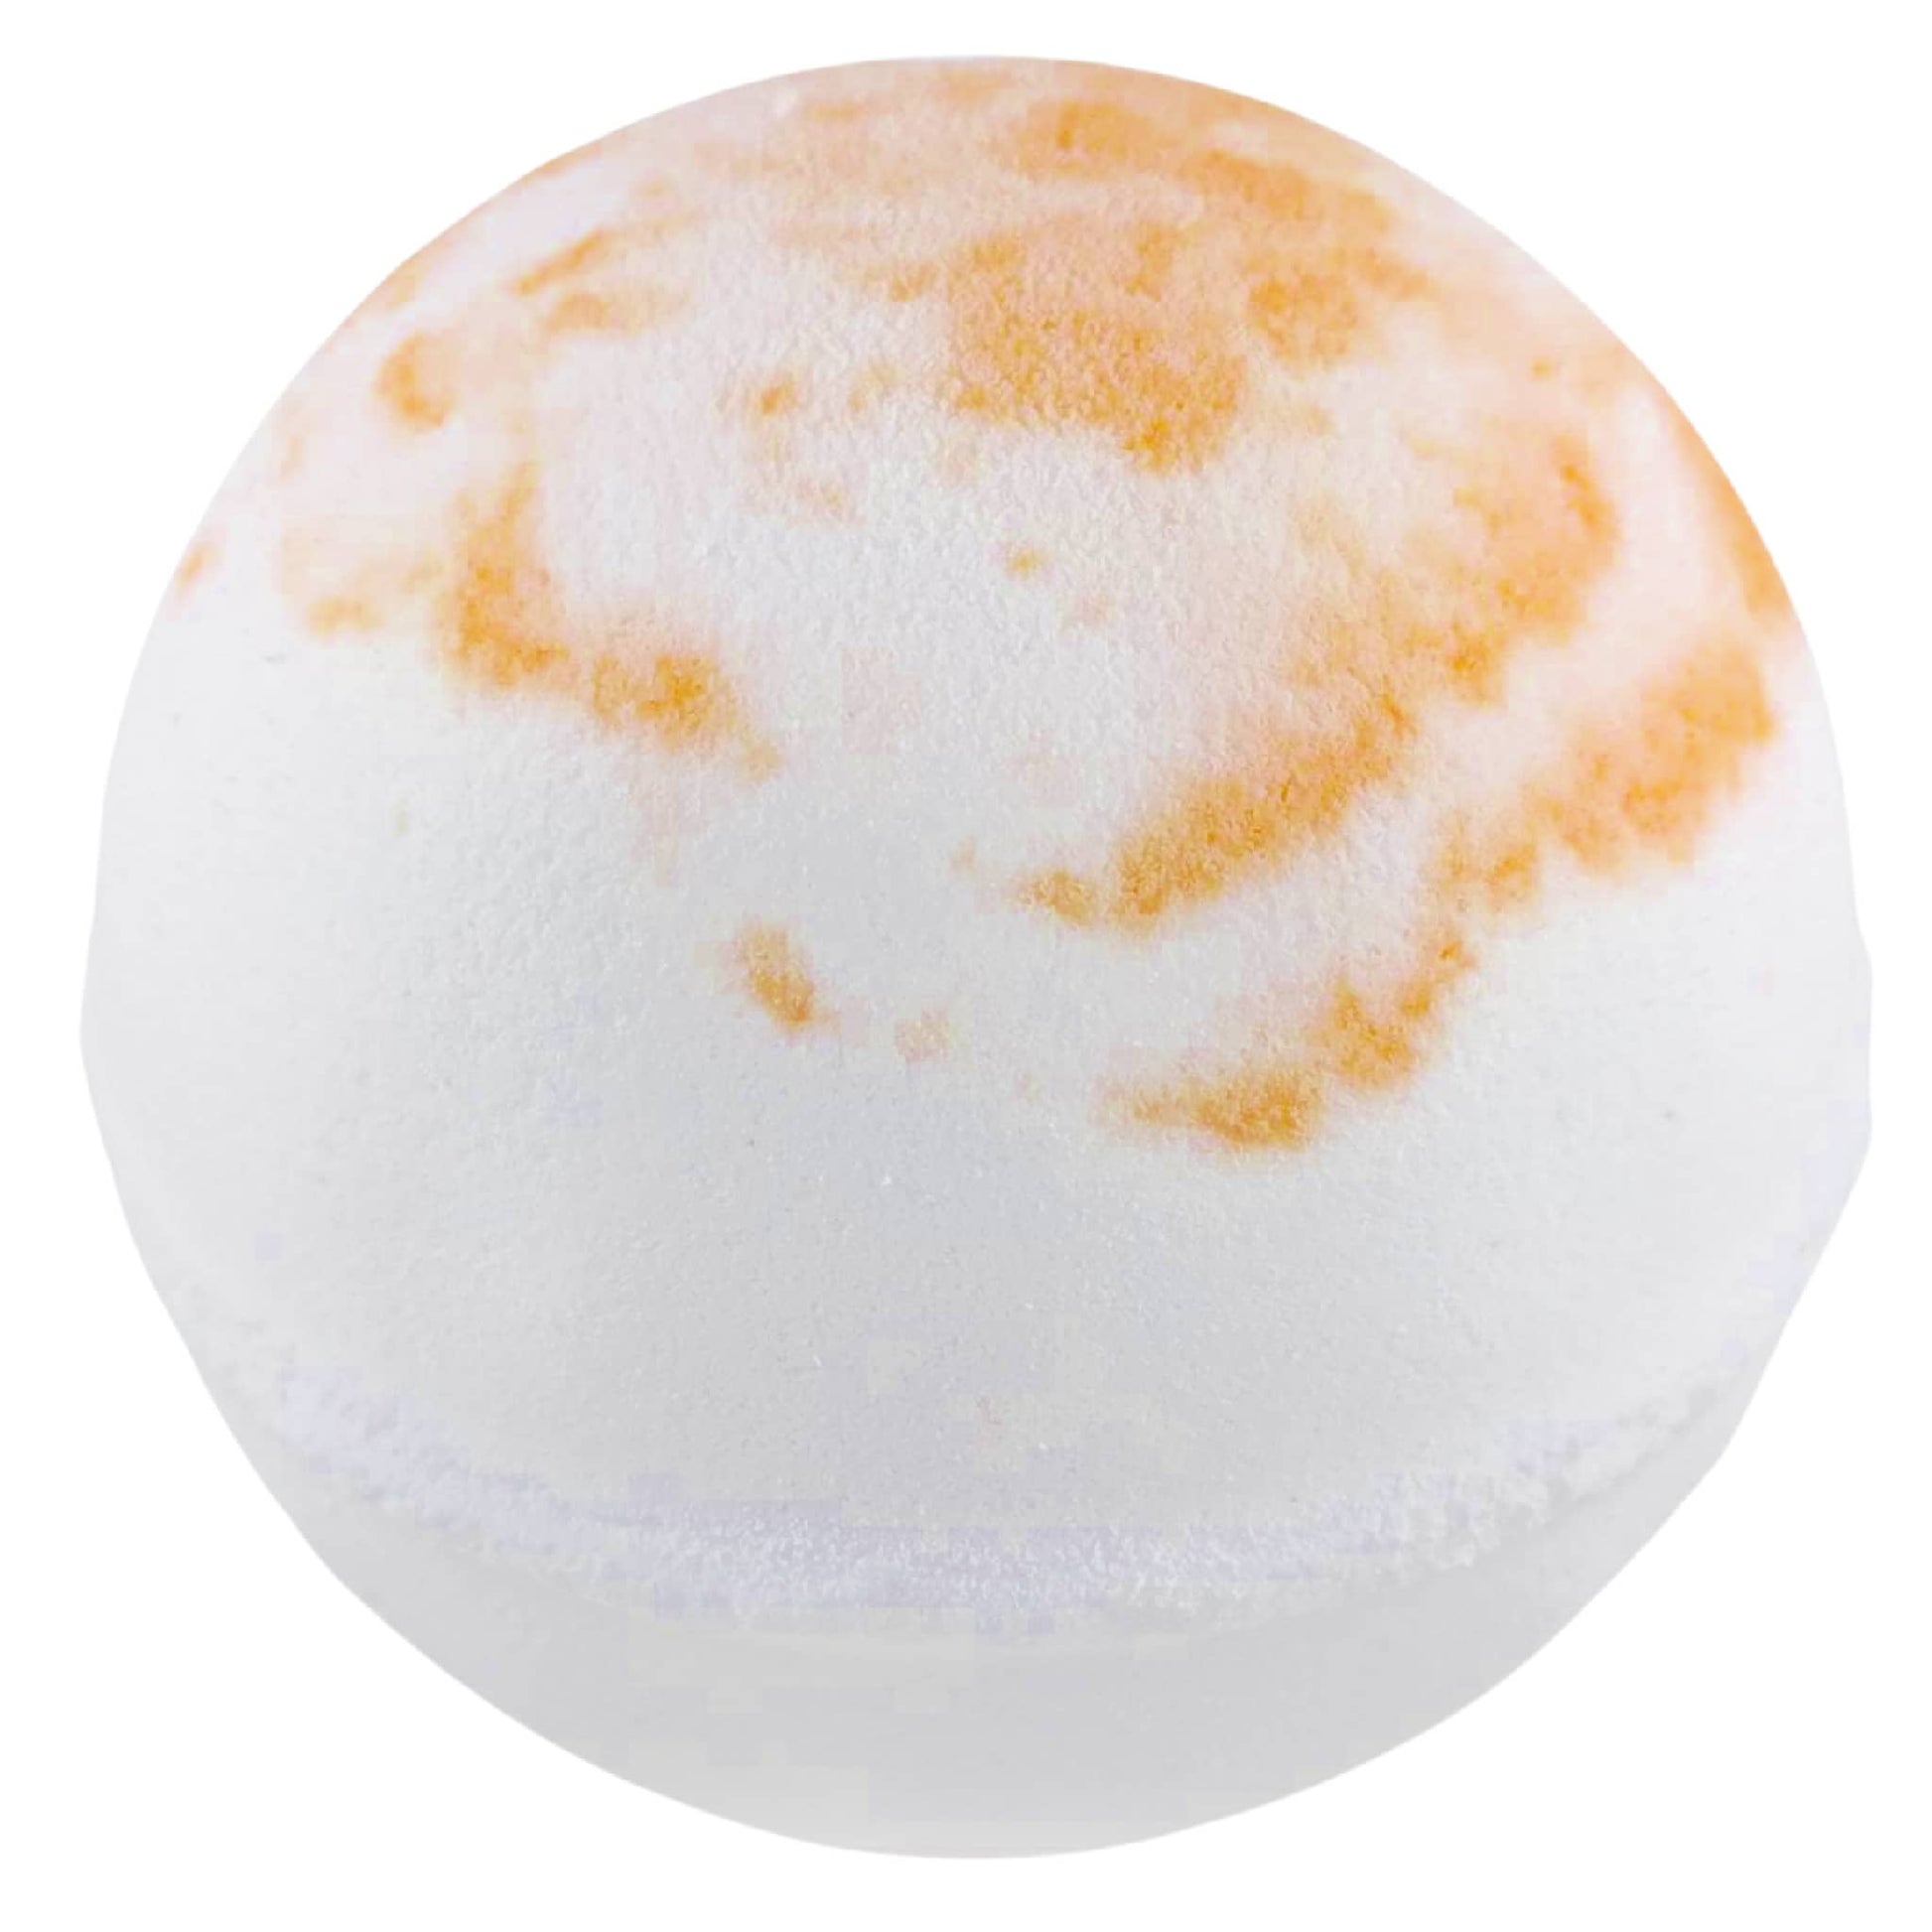 Awaken Aromatherapy Bath Bomb VEGAN | Citrus Mint